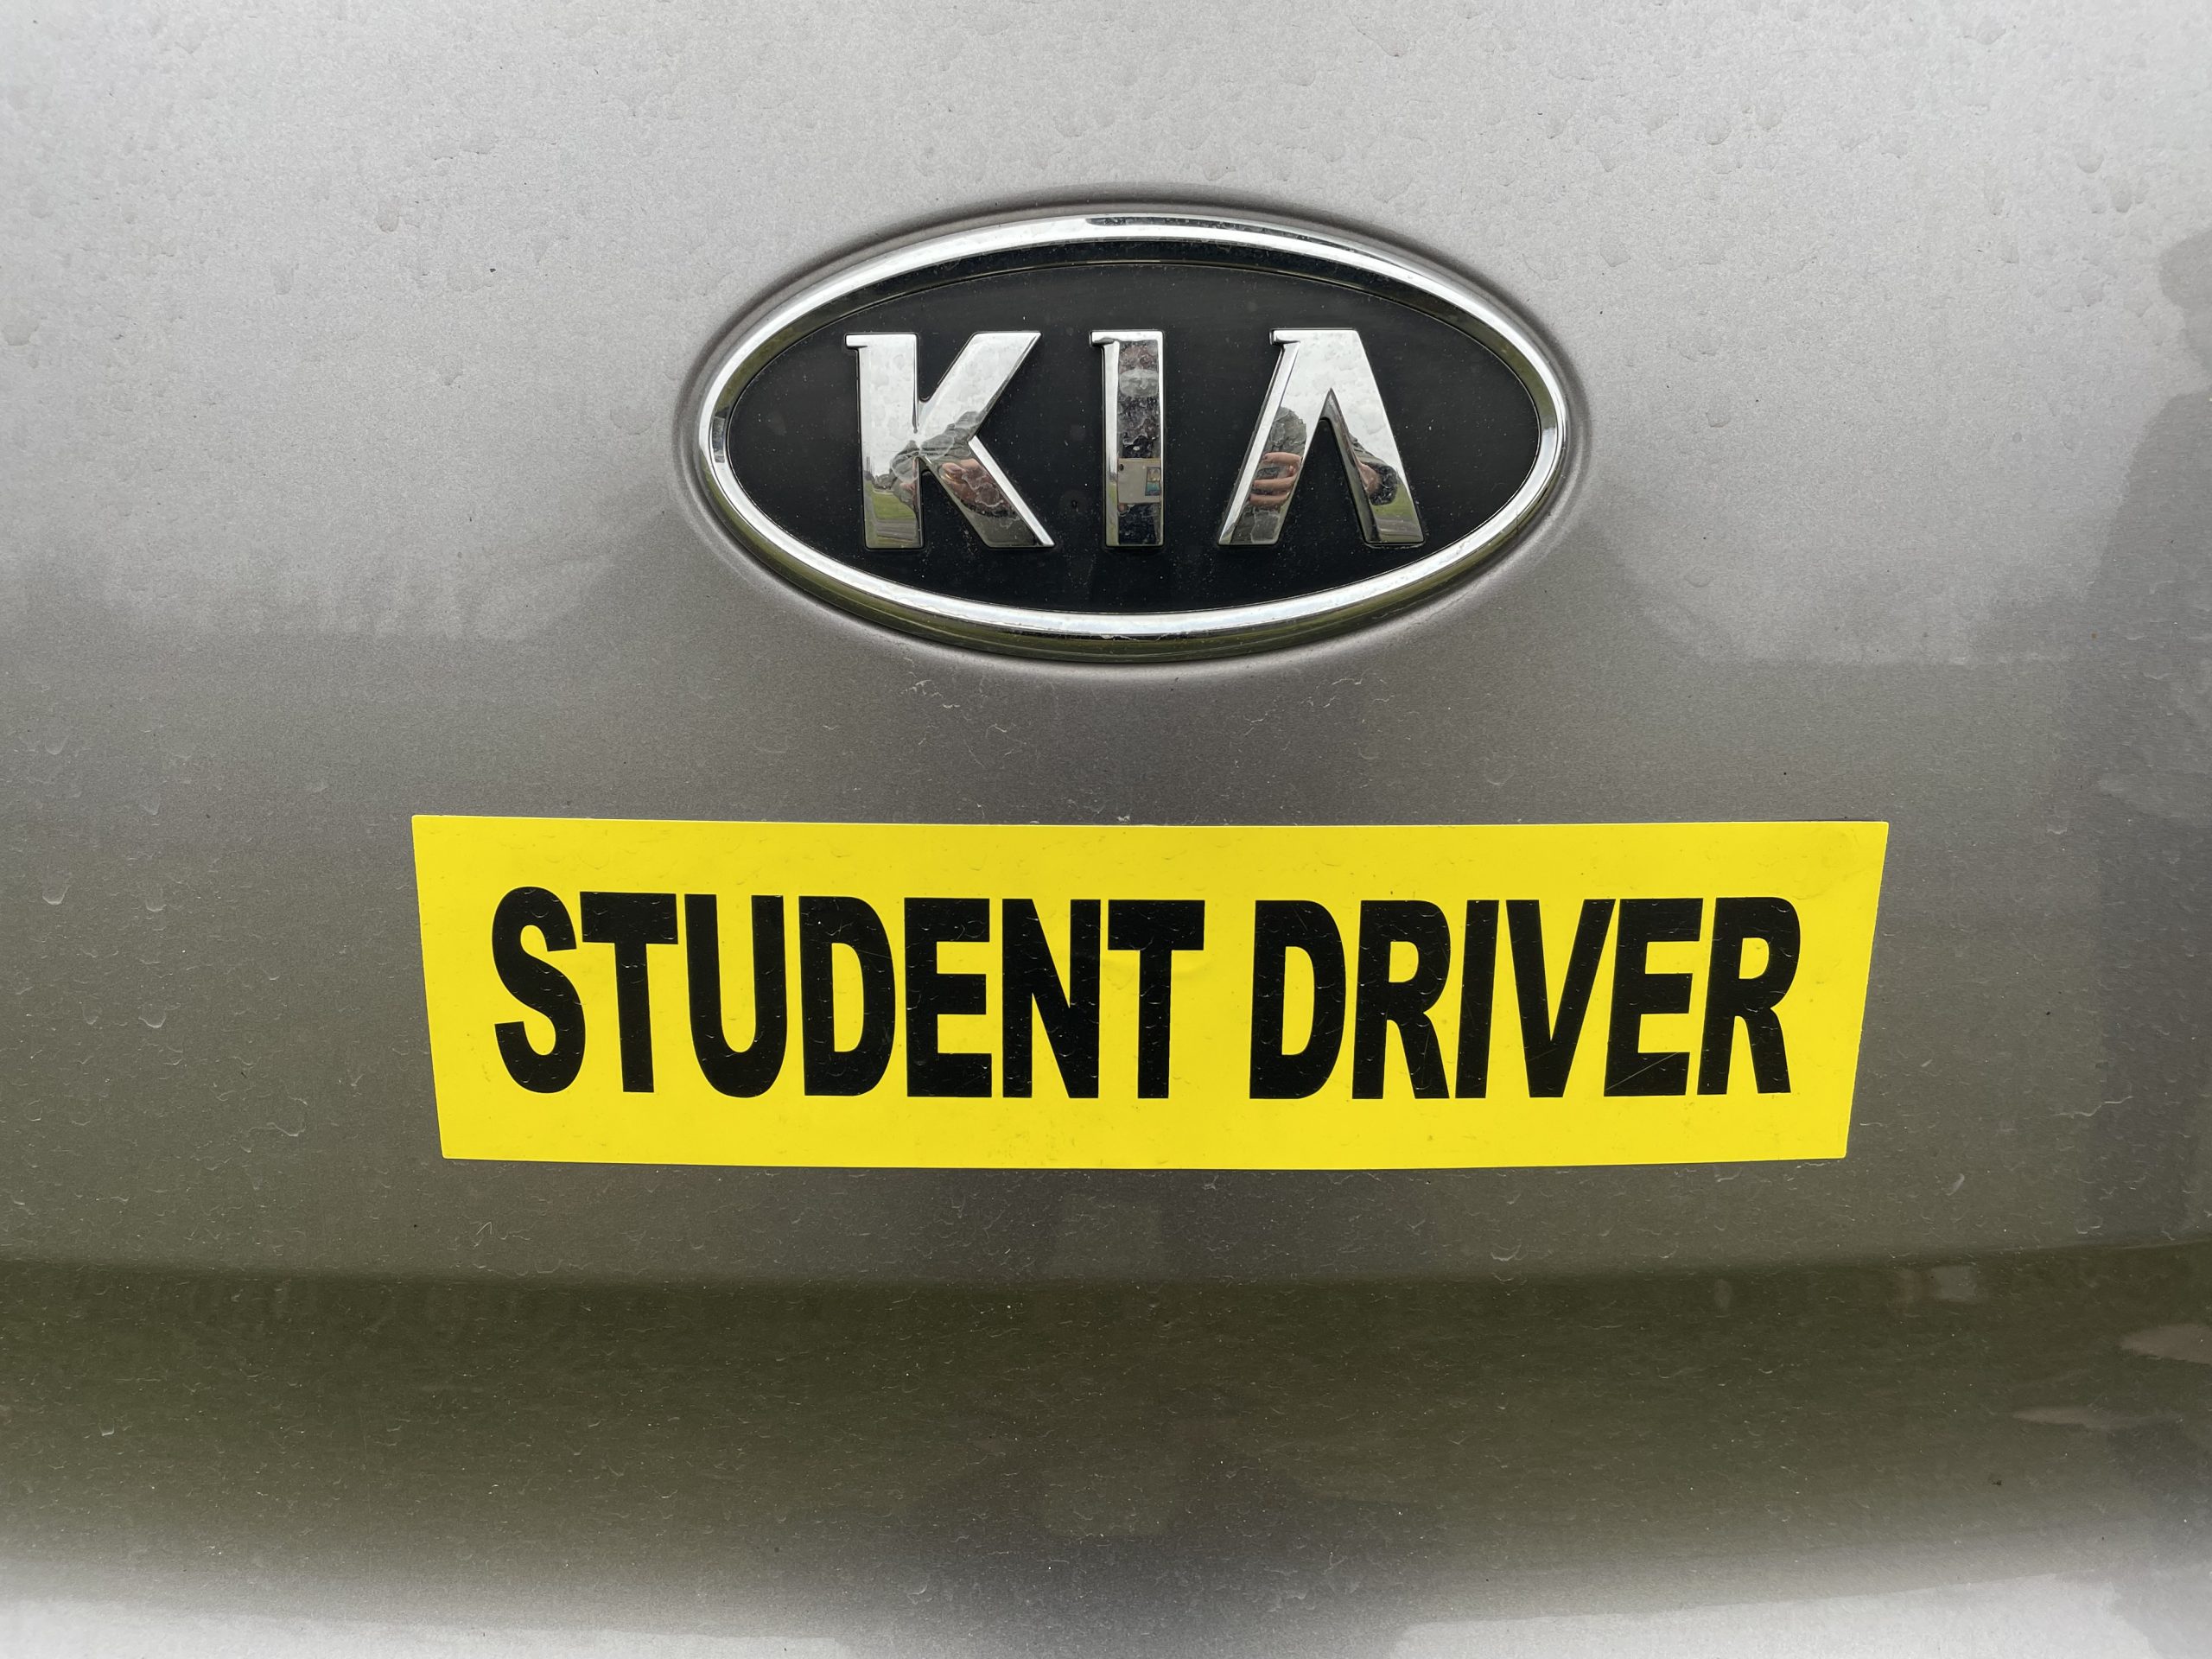 Bumper sticker that says "Student Driver" under a Kia car logo